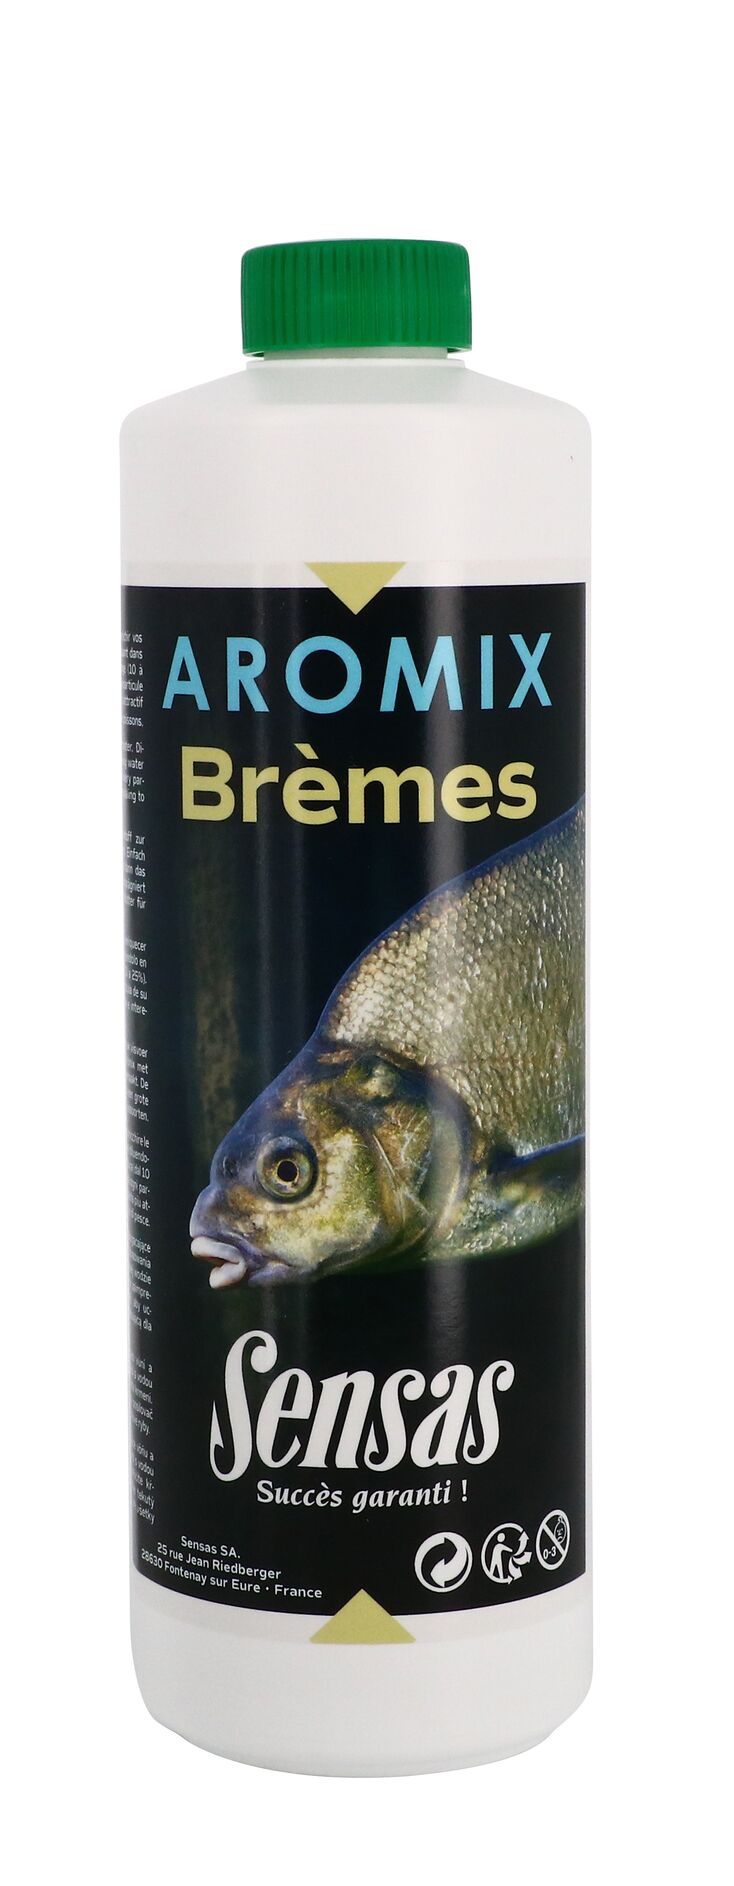 Ароматизатор Sensas AROMIX Bremes 0.5л